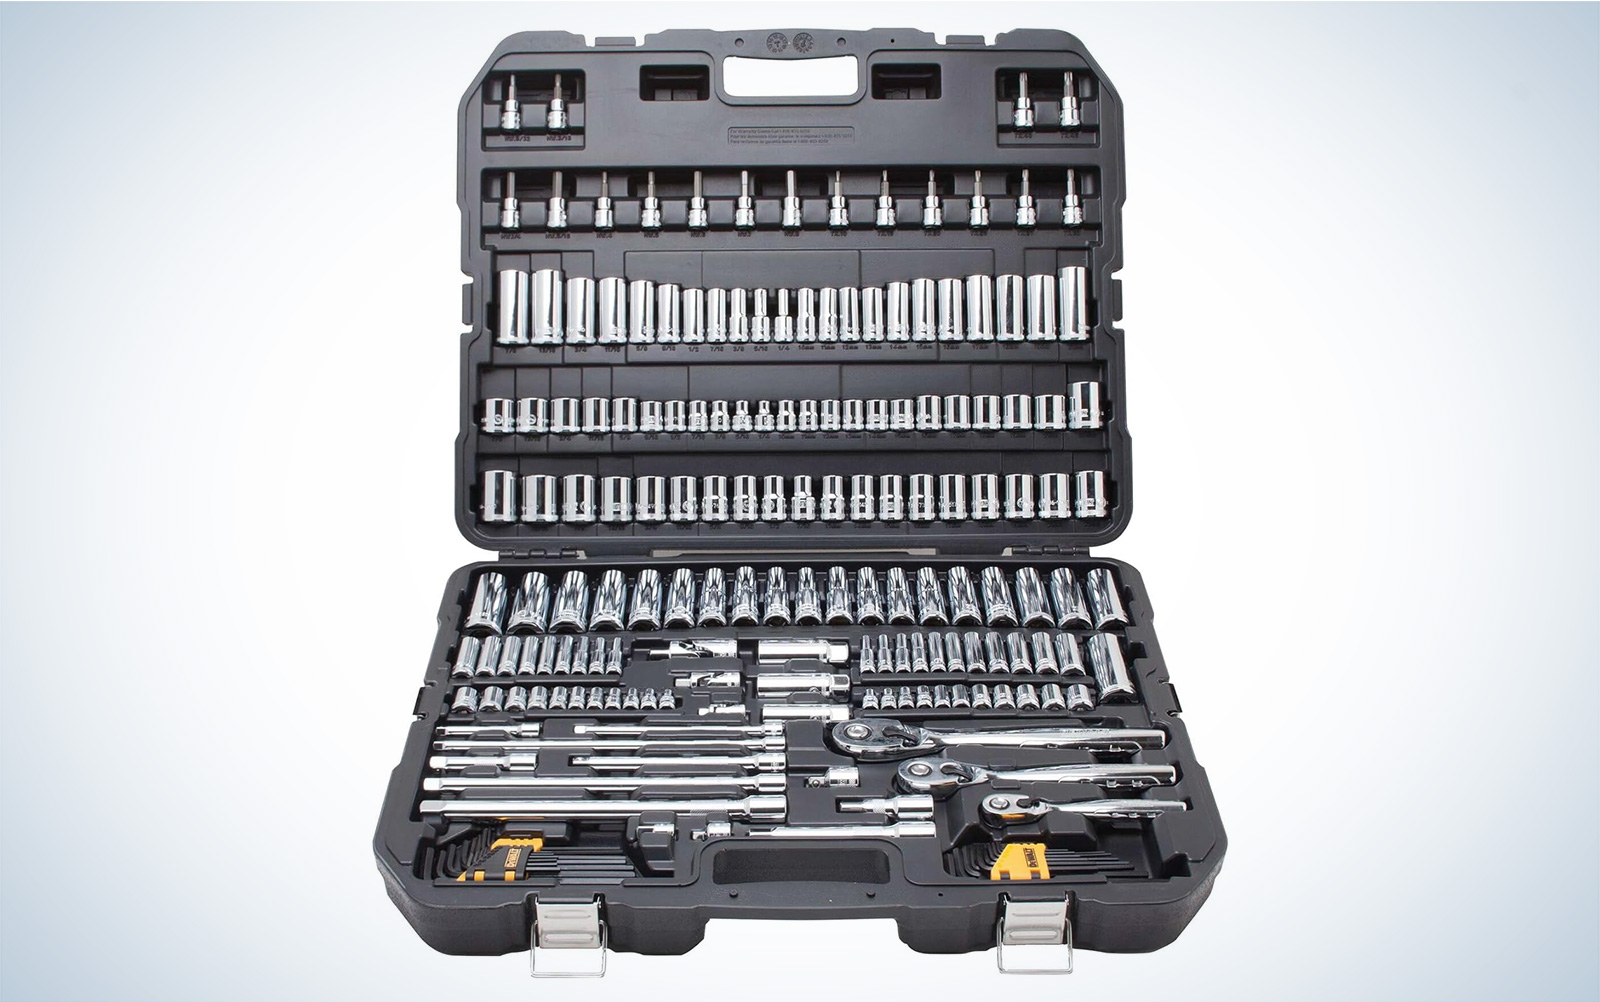 DeWalt's mechanic's tool set on sale for black friday on a plain background